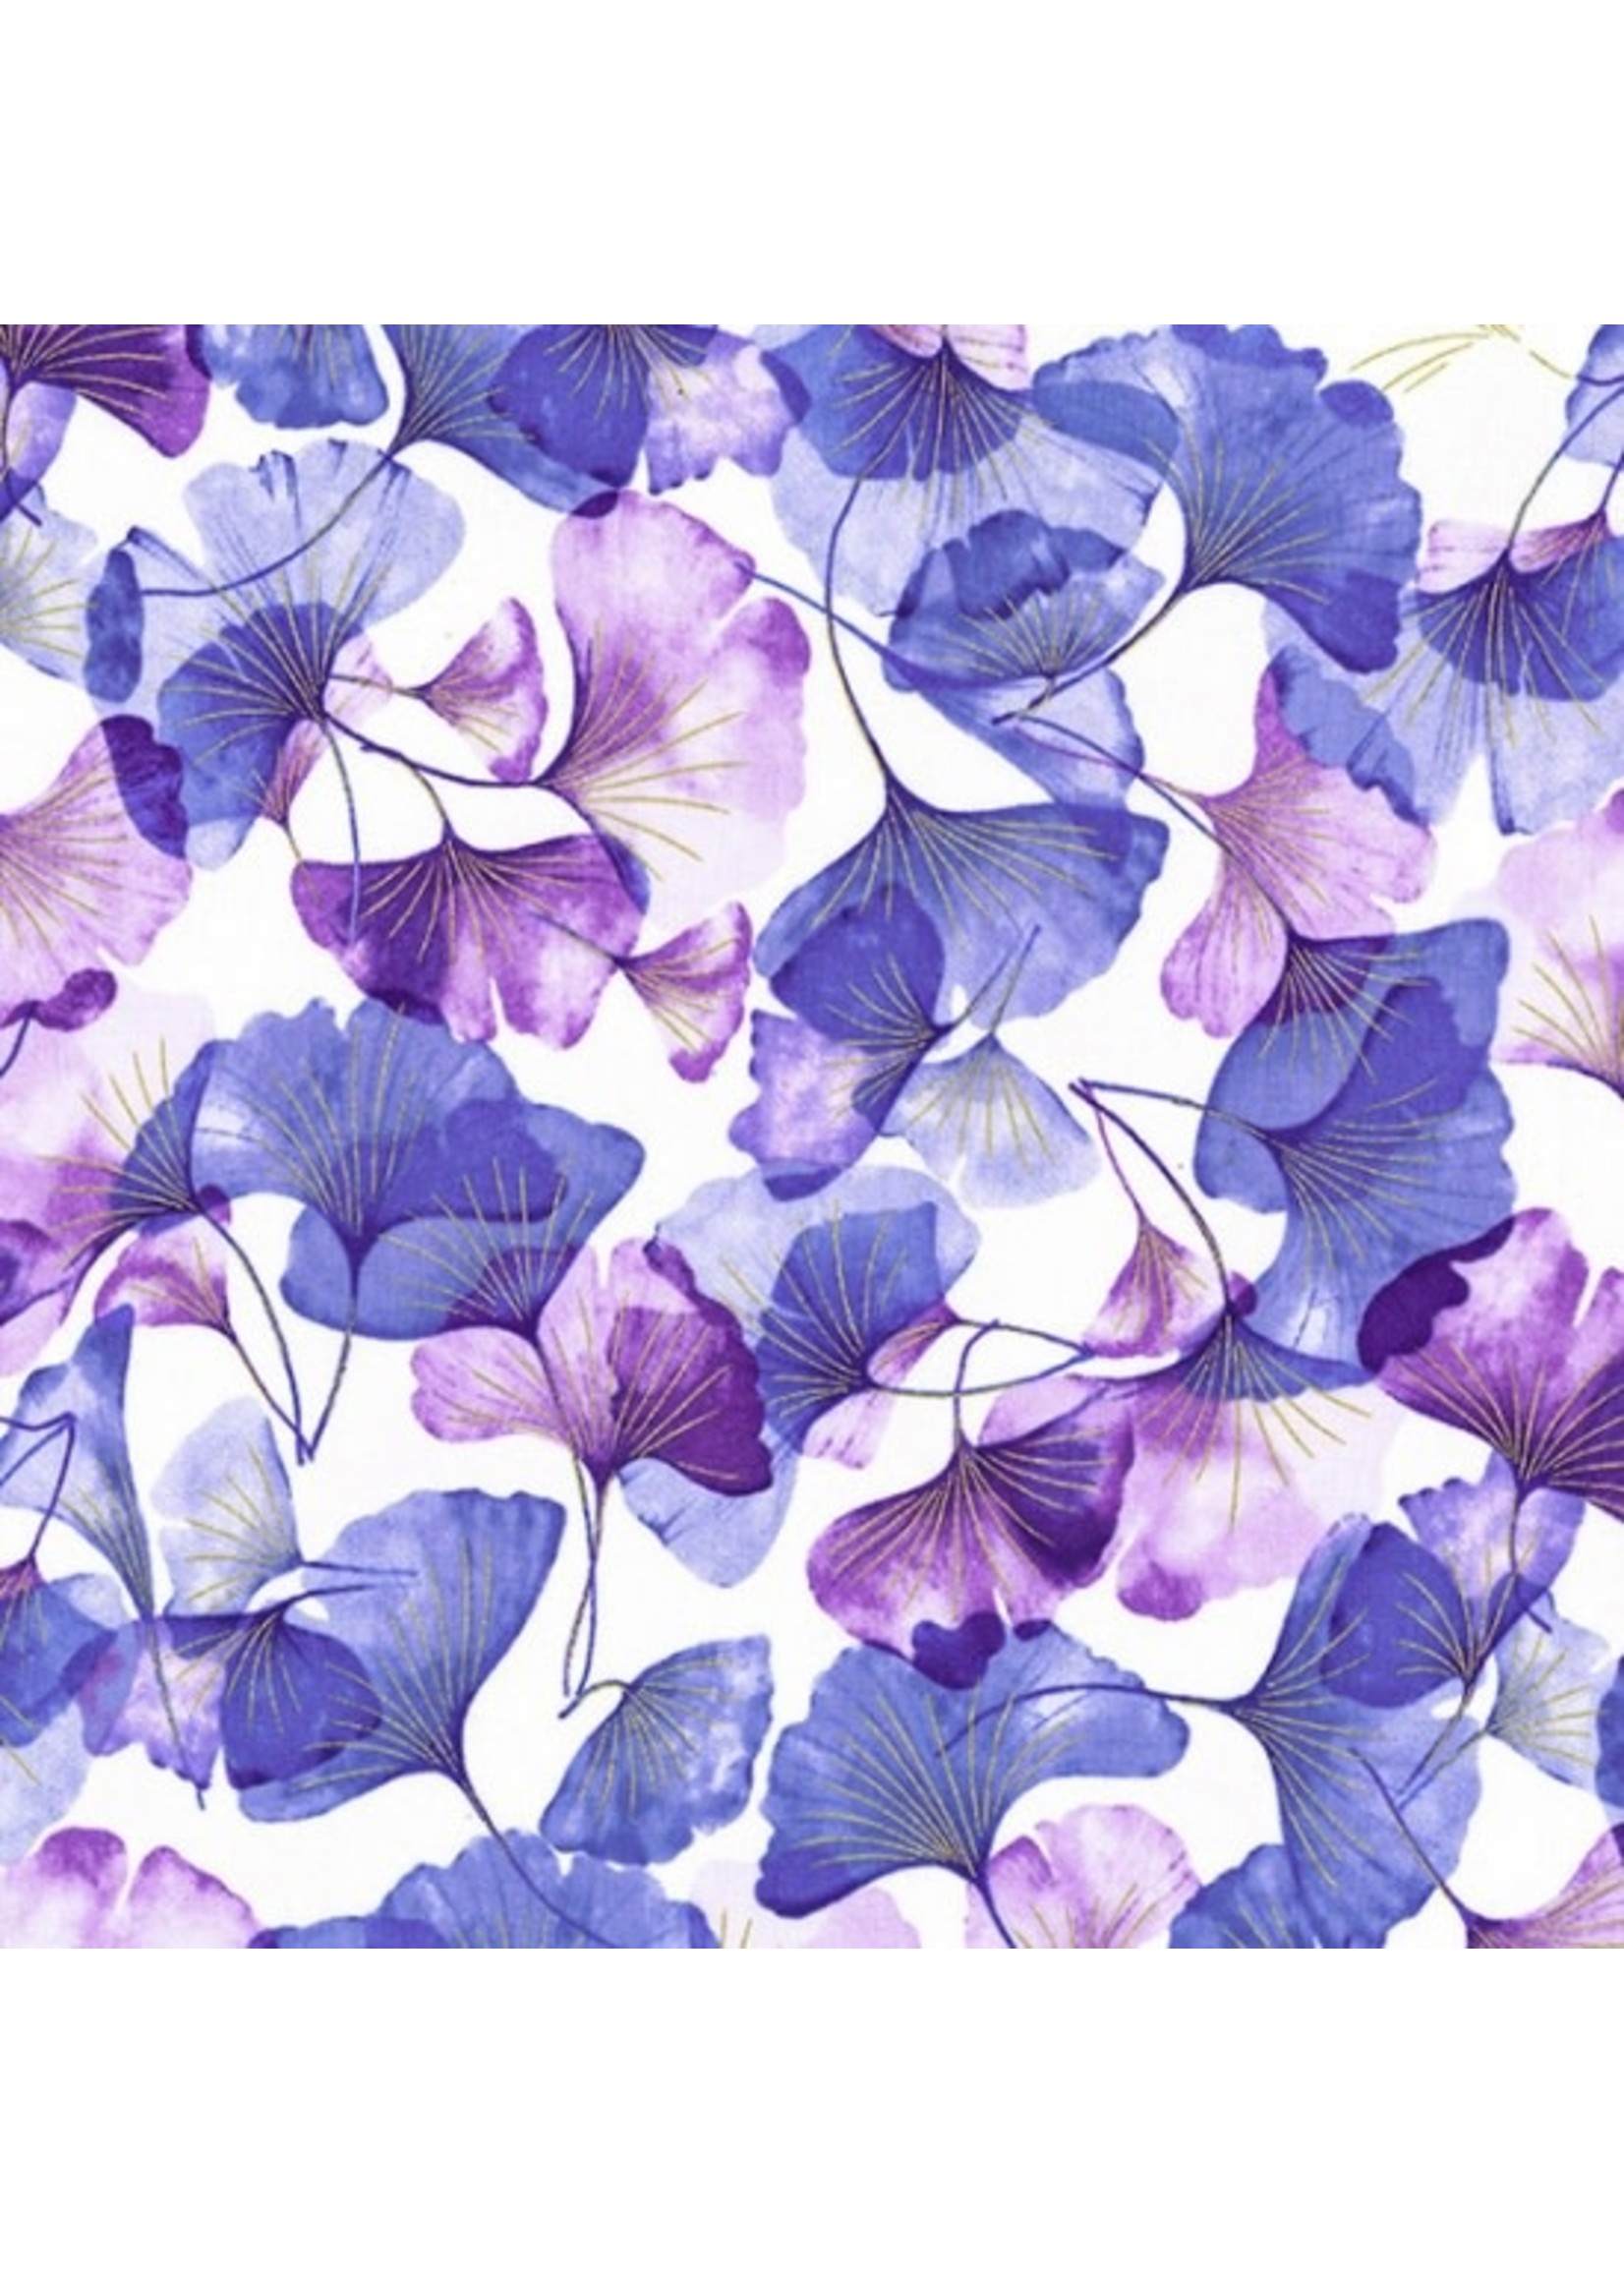 Hoffman Fabrics Graceful Garden - Violet